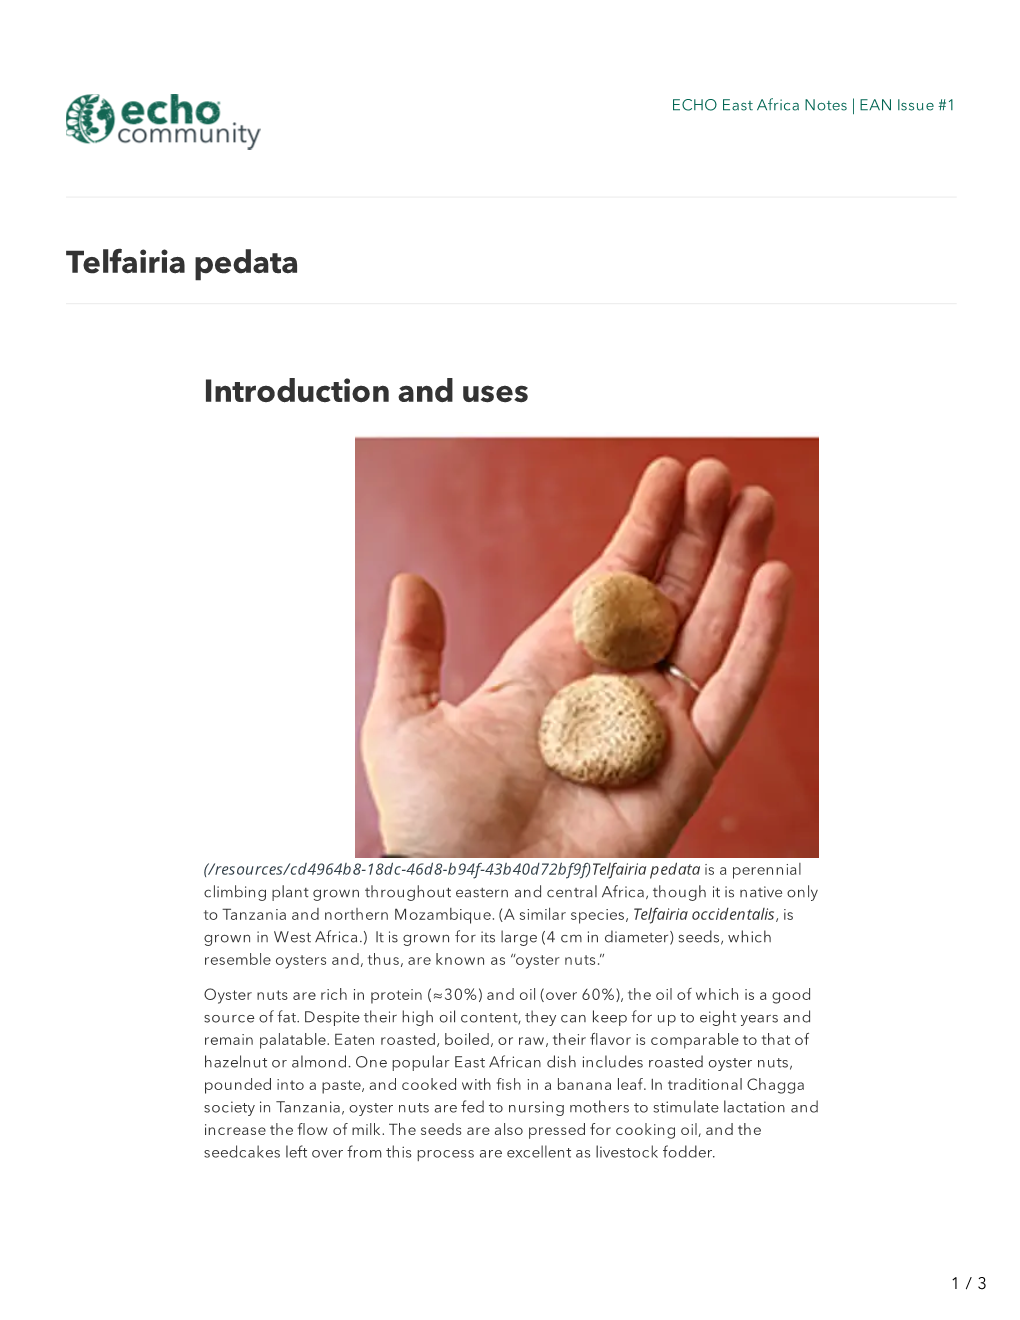 Introduction and Uses Telfairia Pedata